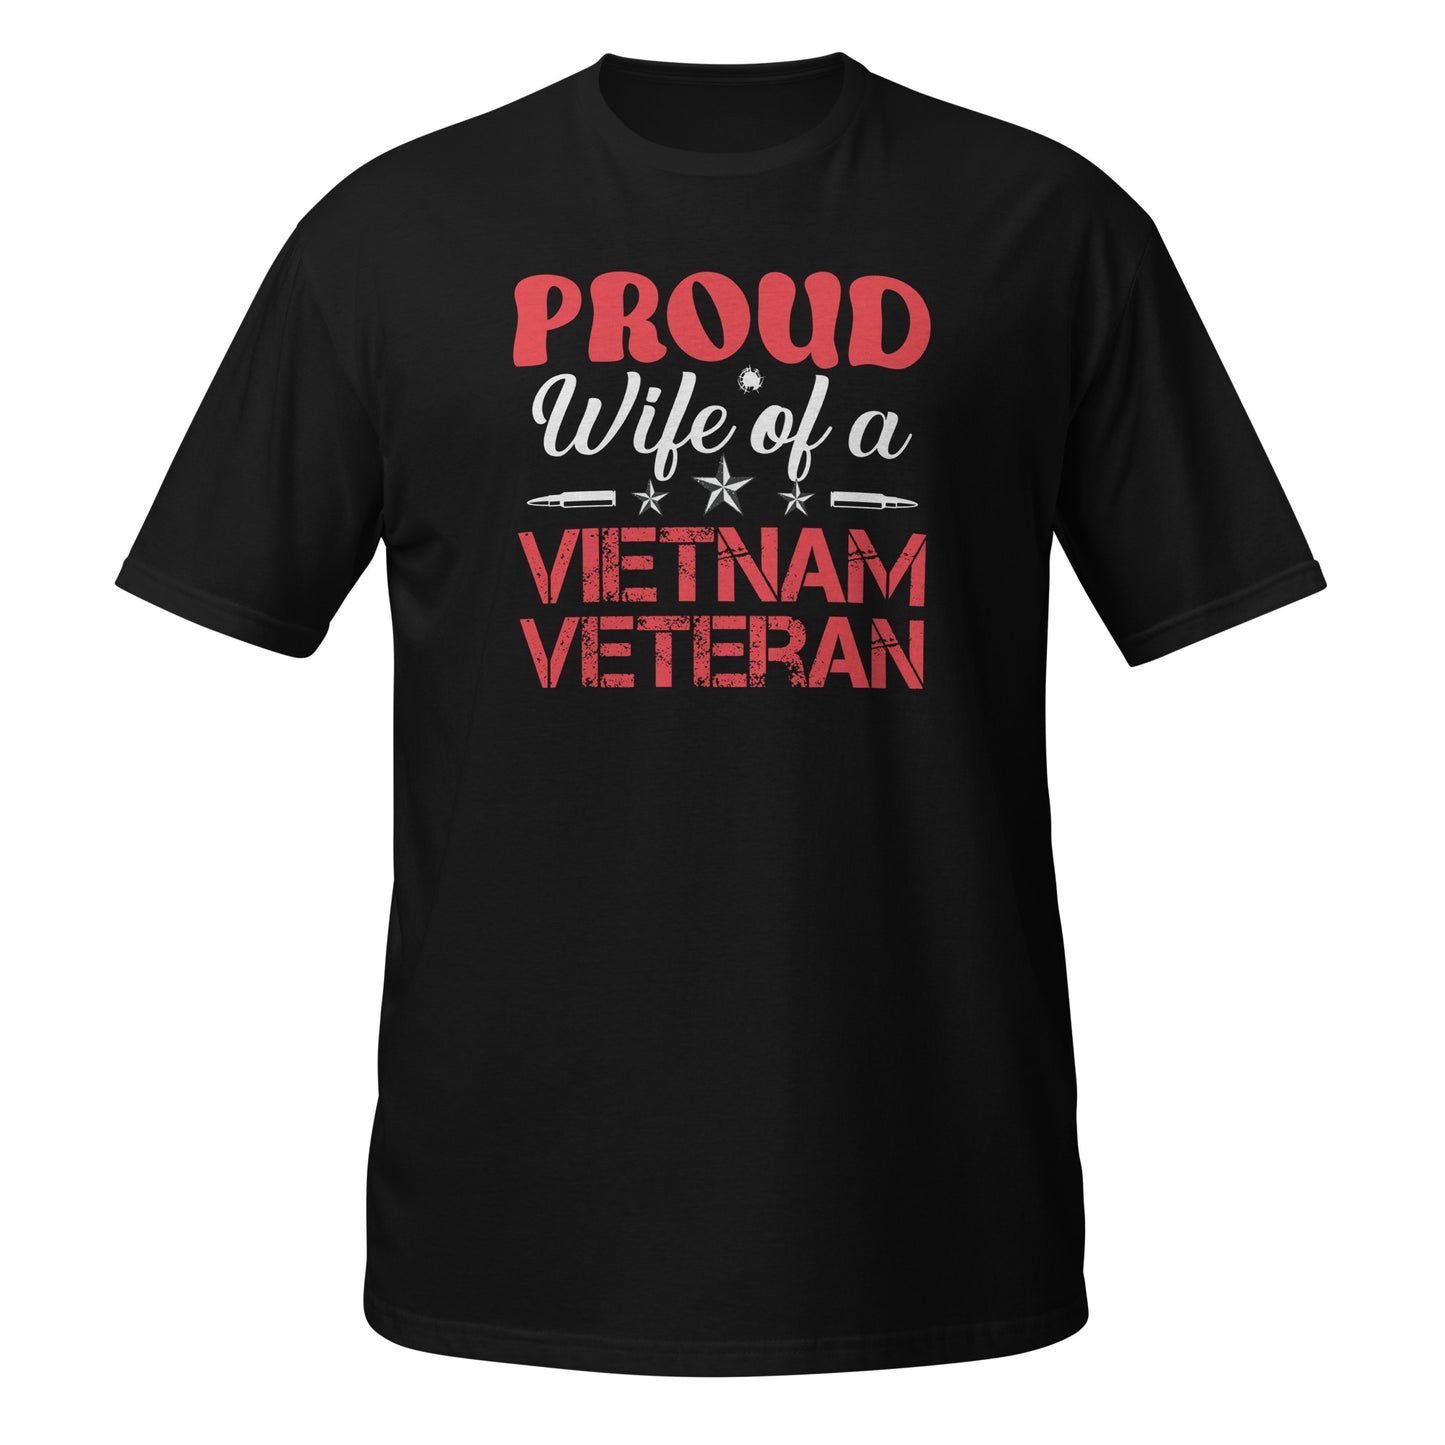 Proud Wife Of A Vietnam Veteran T-Shirt, Black Color